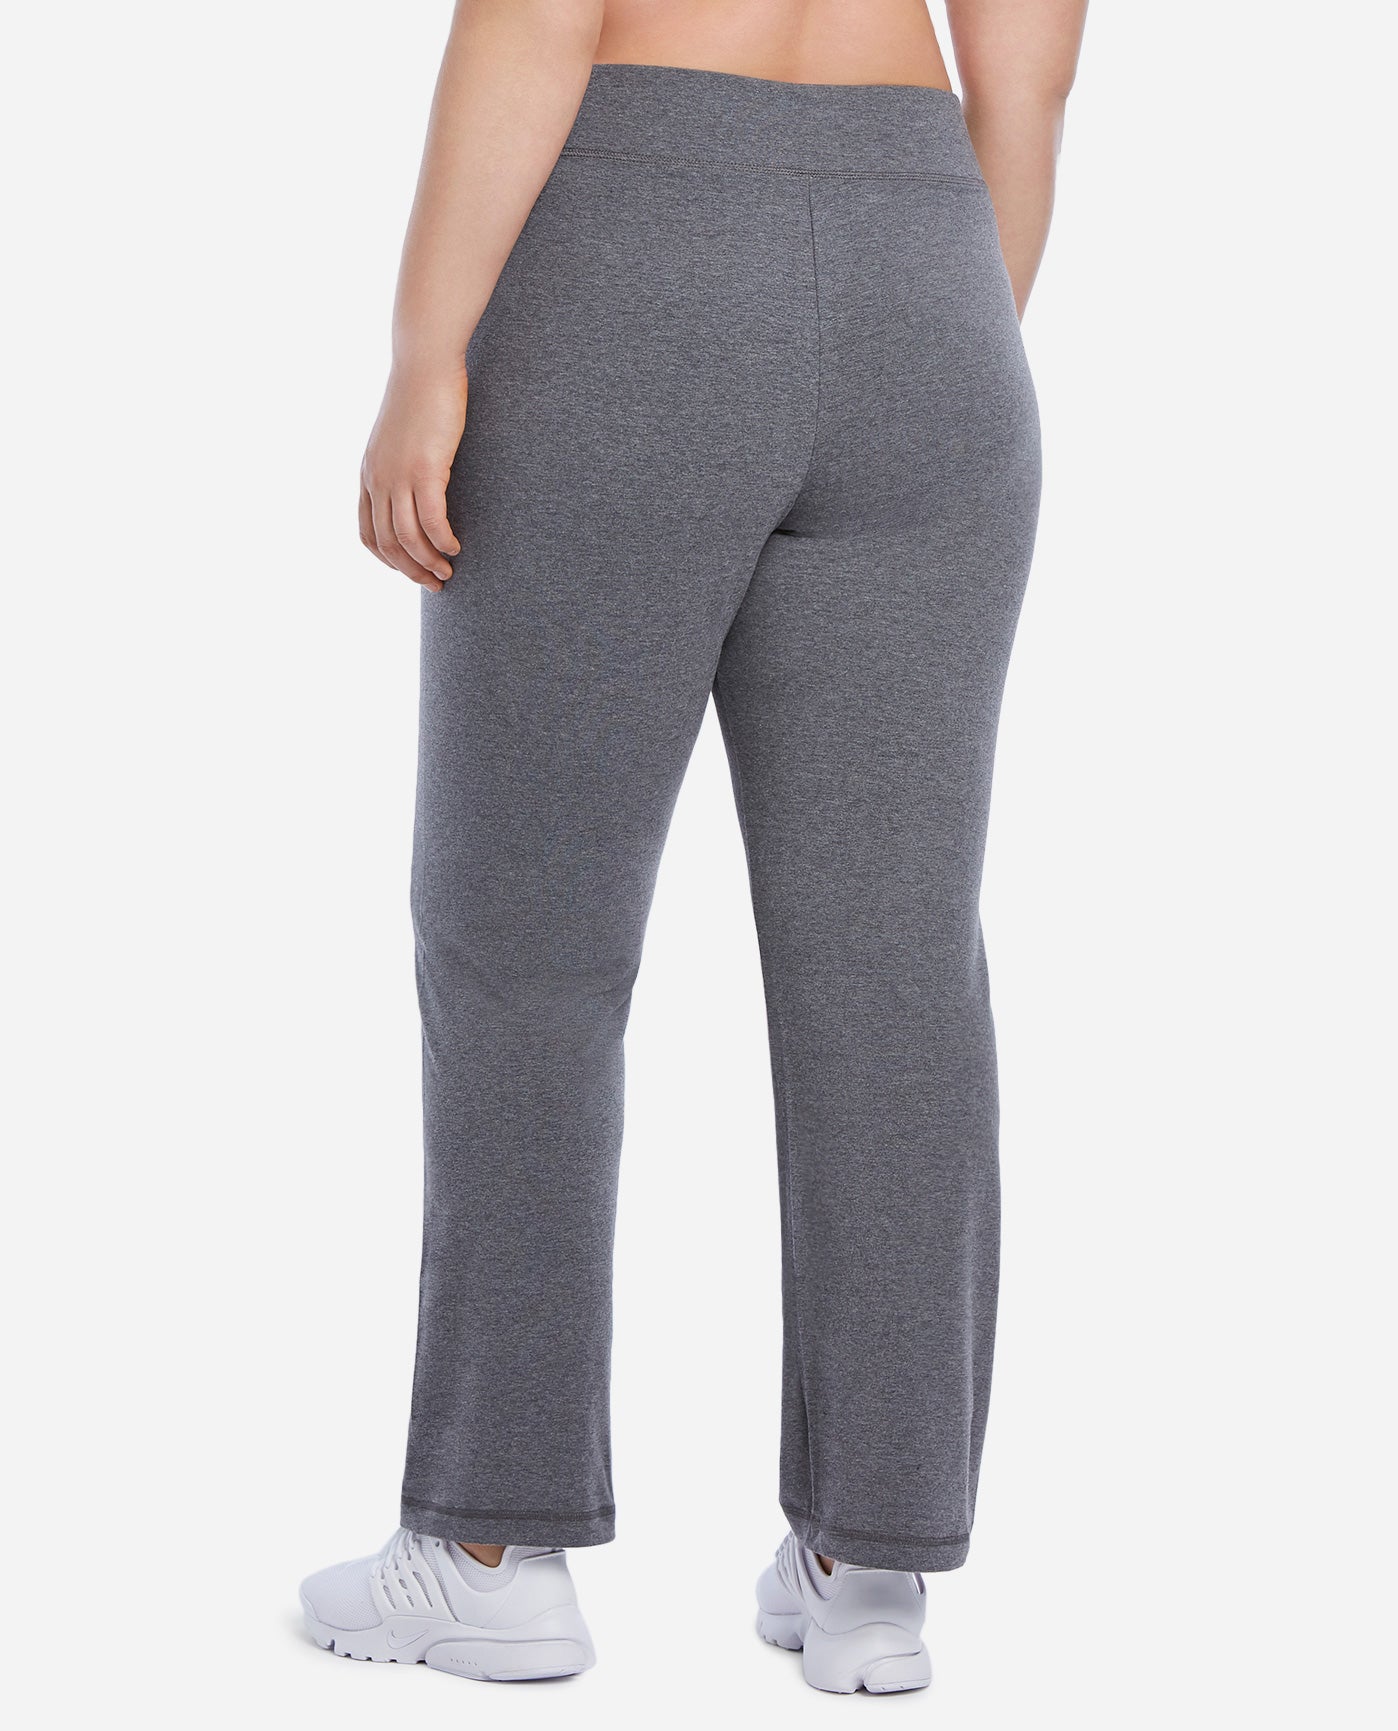 gray yoga pants